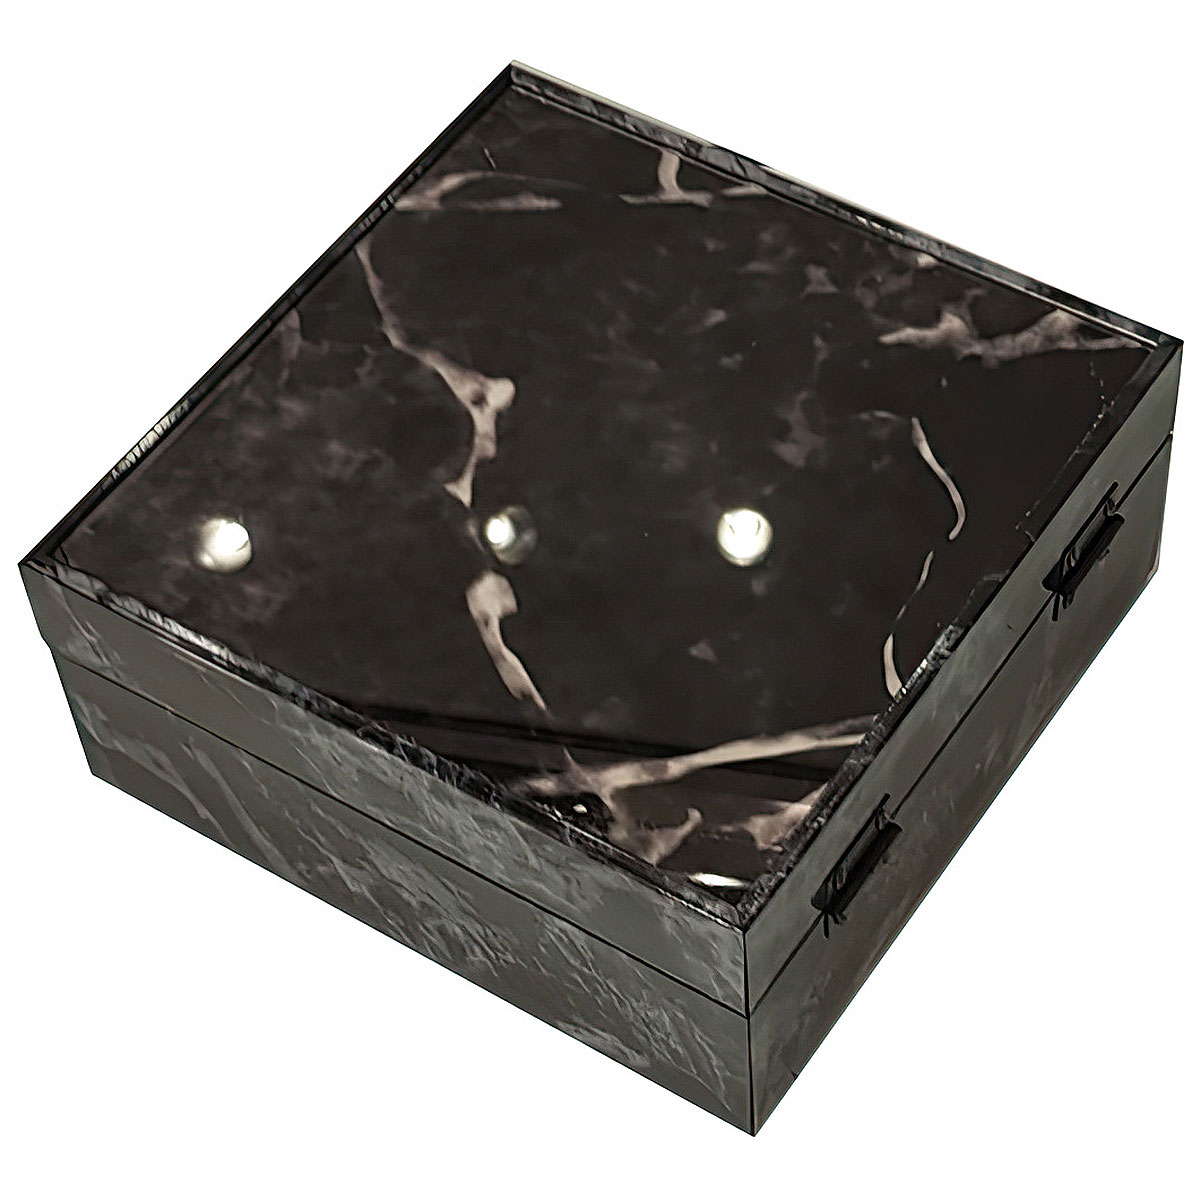 Шкатулка Ozverler marble black 20x20см шкатулка дерево под роспись купол